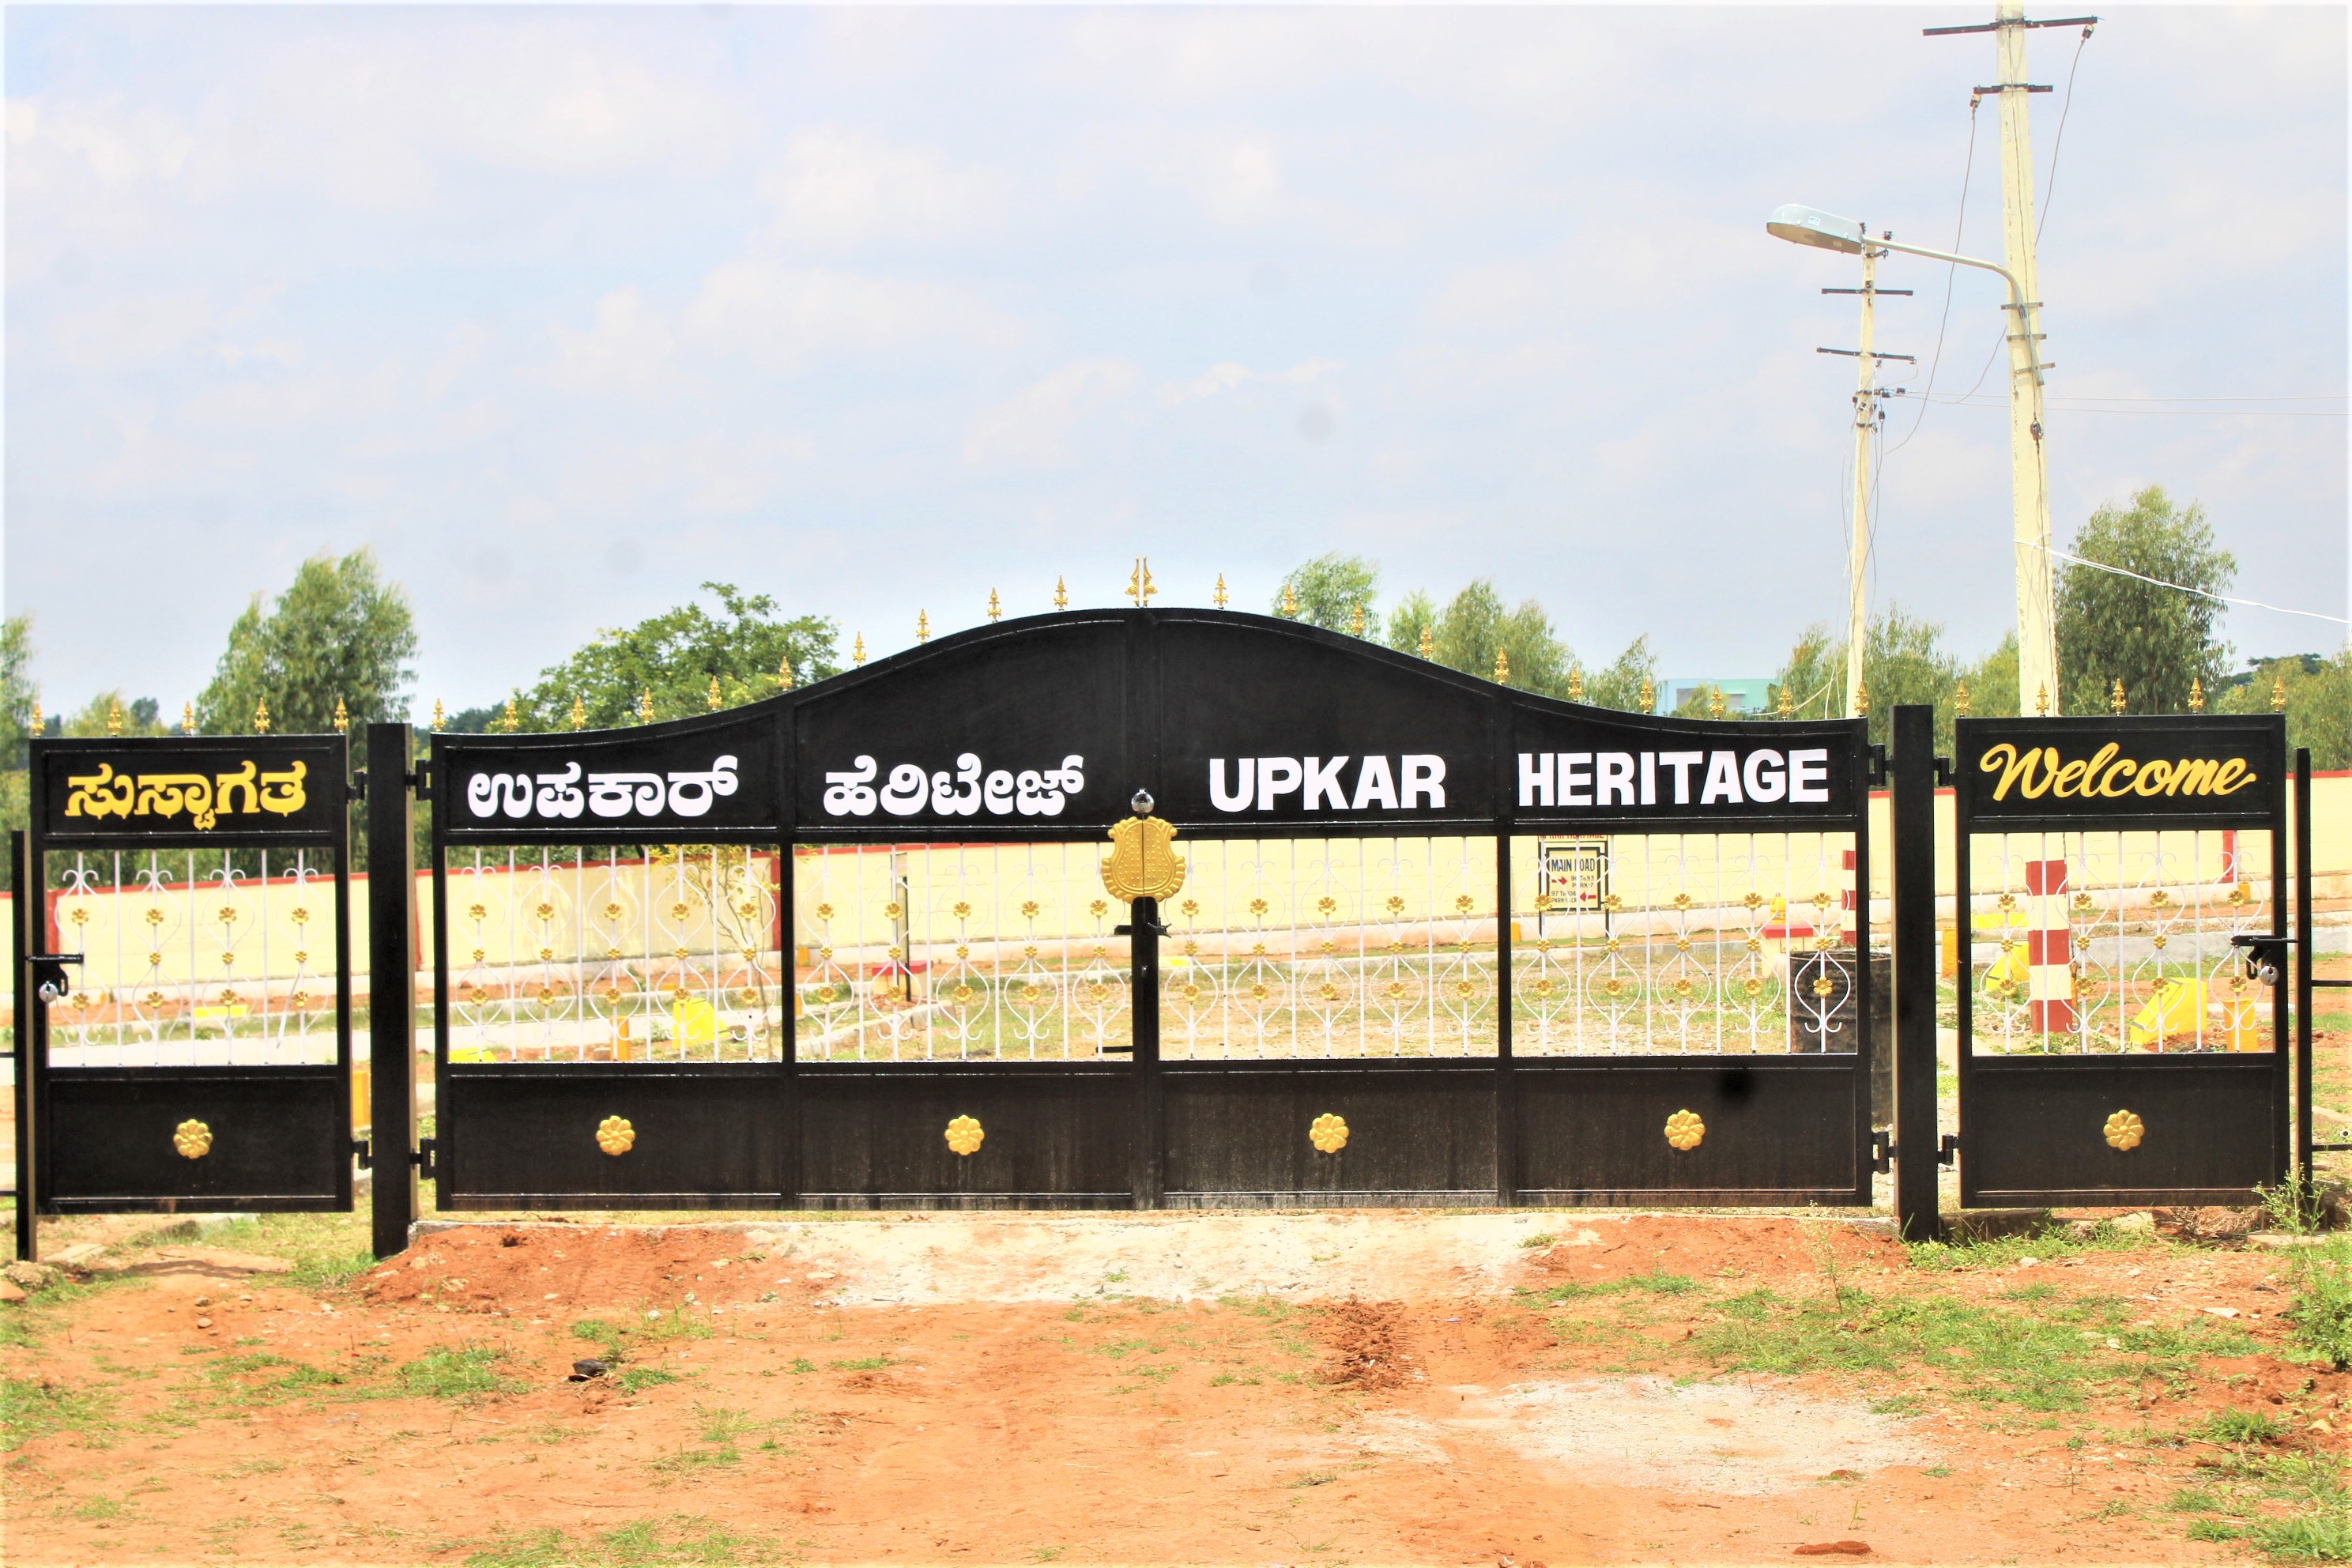 Upkar heritage